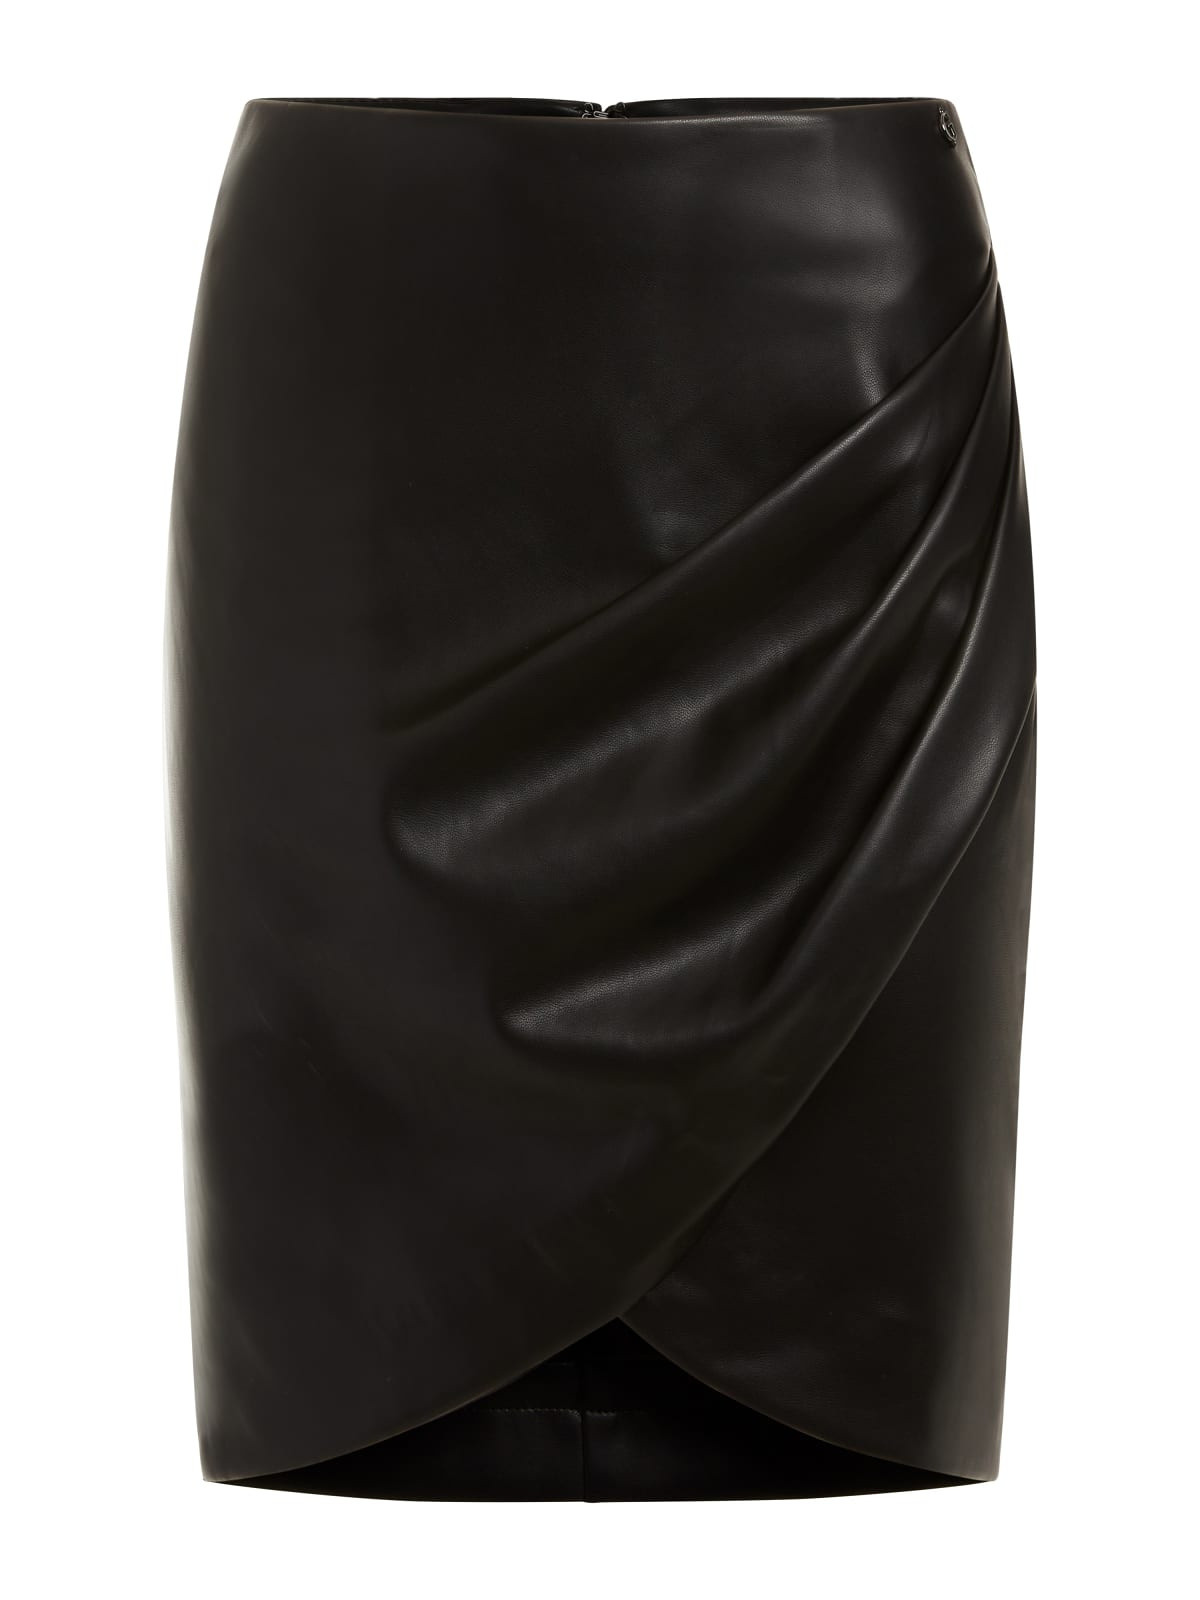 Imitation leather longuette skirt, Black, large image number 0